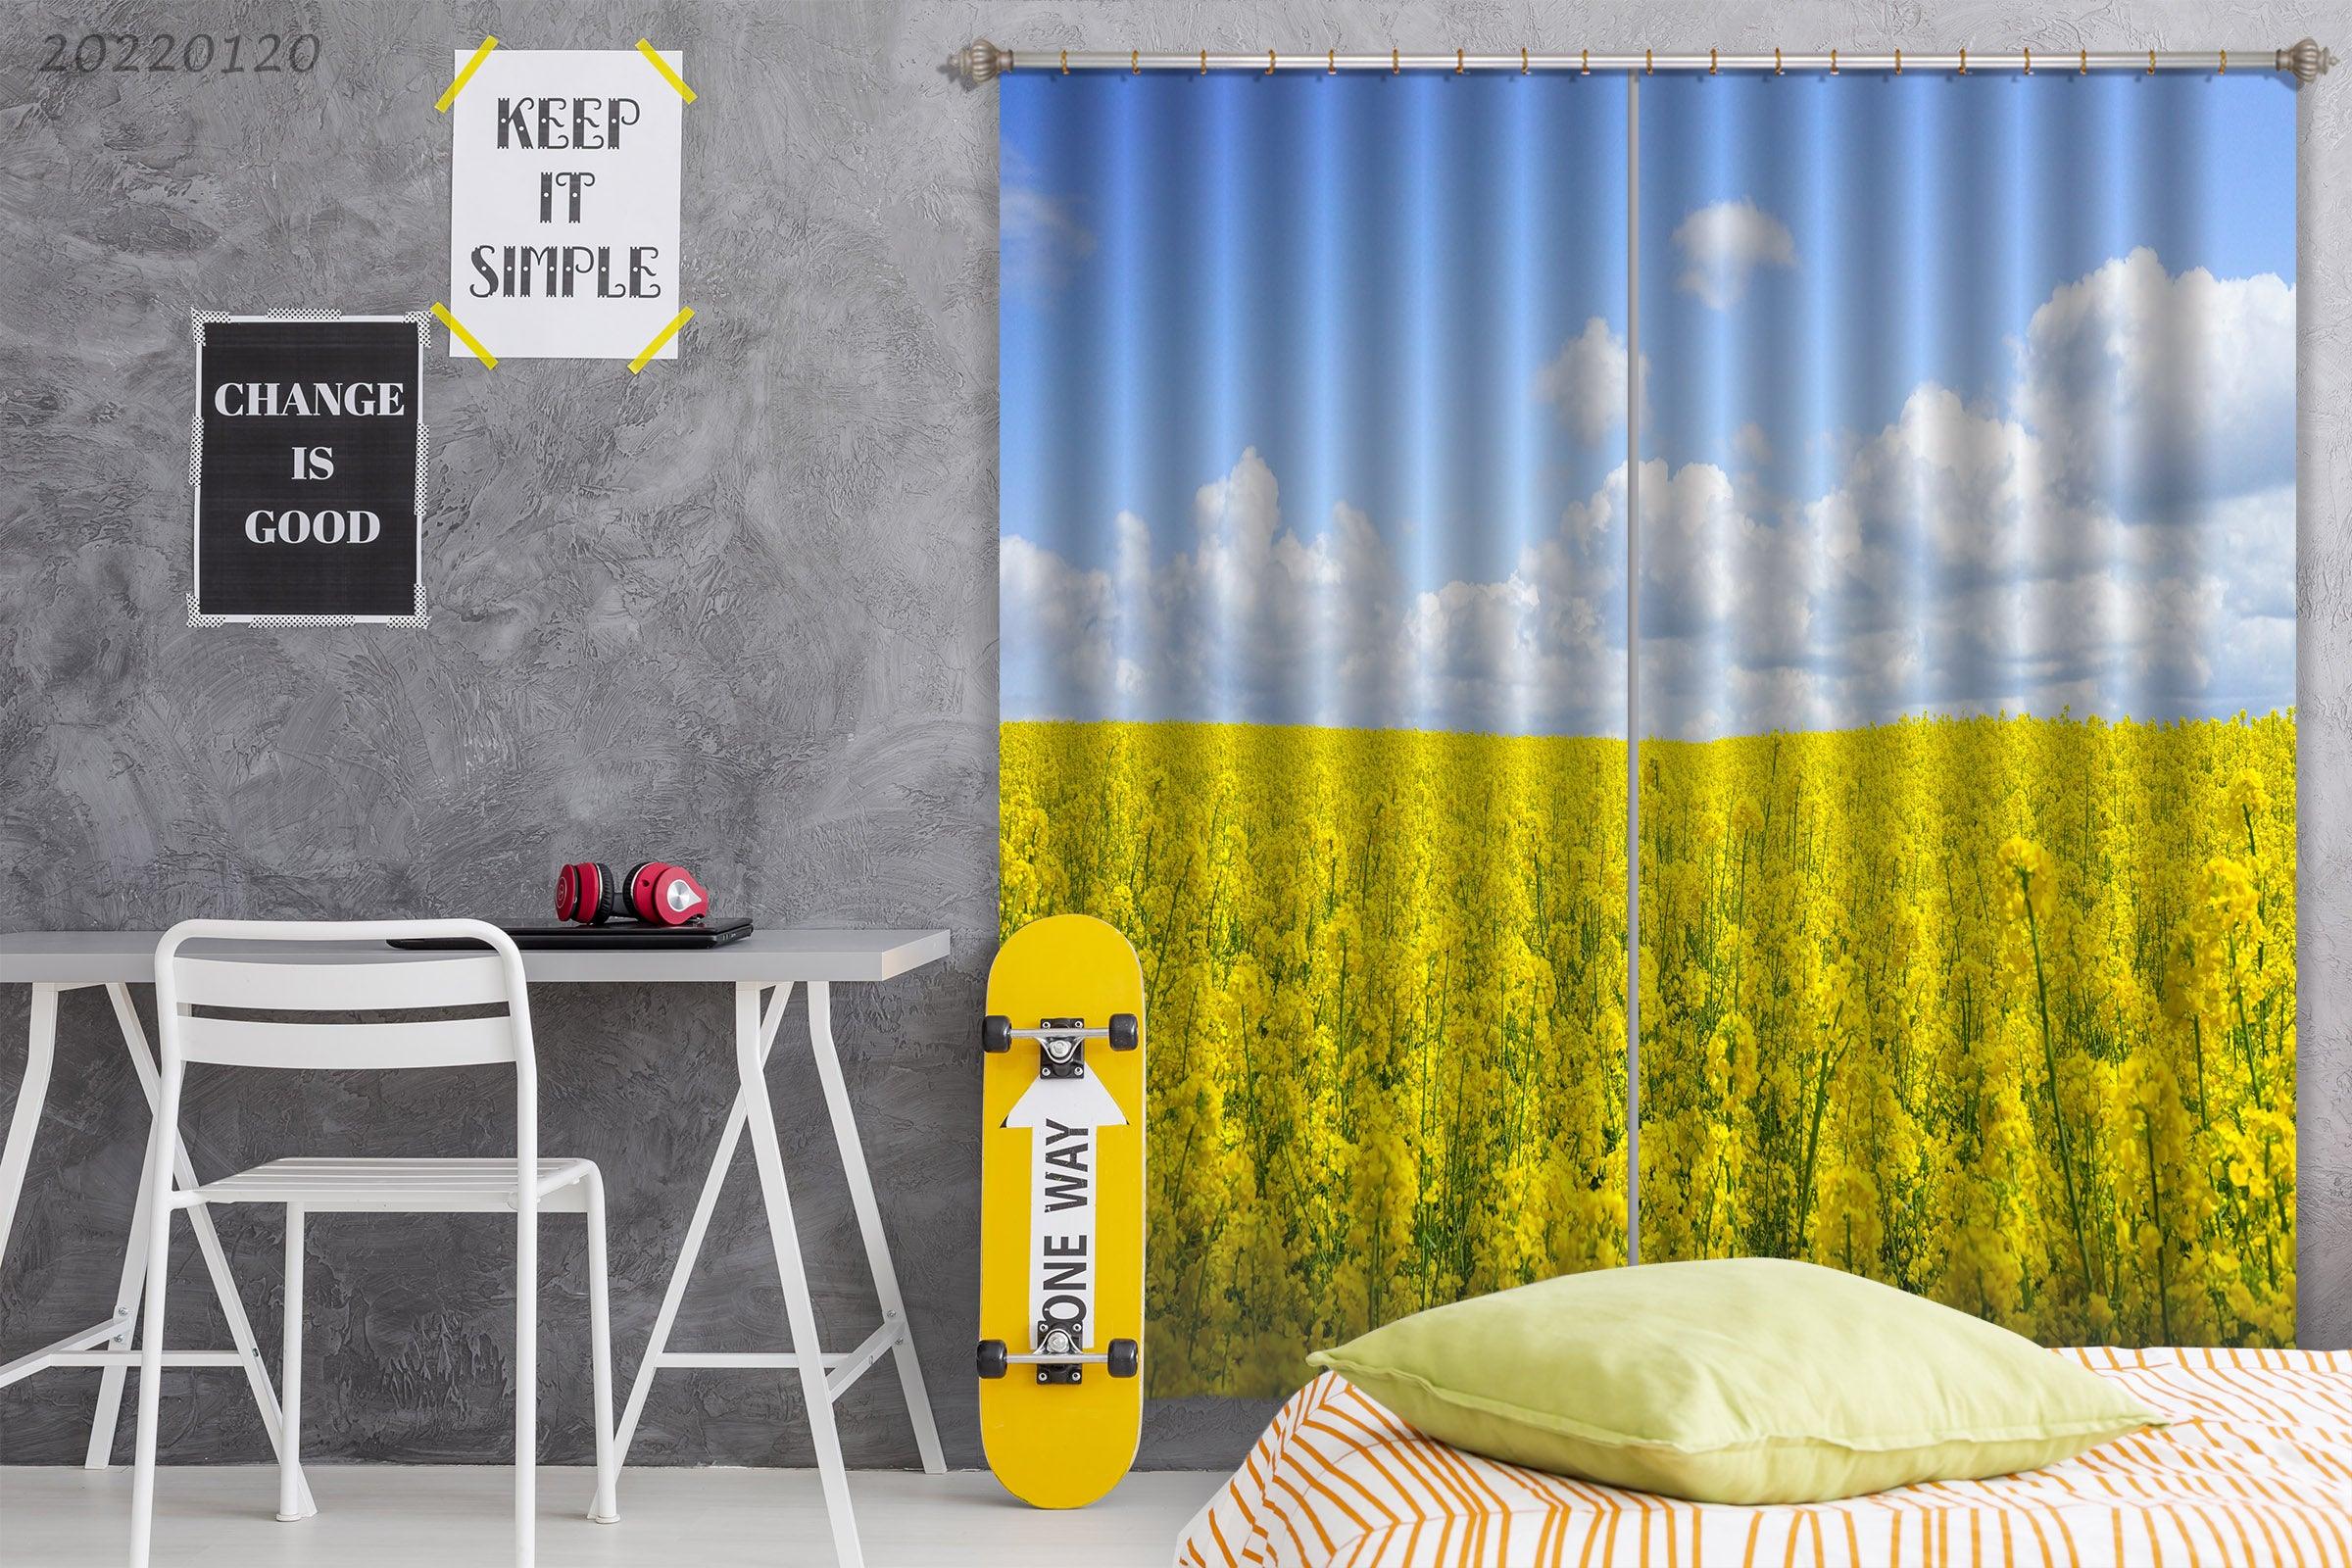 3D Yellow Canola Flower Curtains and Drapes GD 1686- Jess Art Decoration